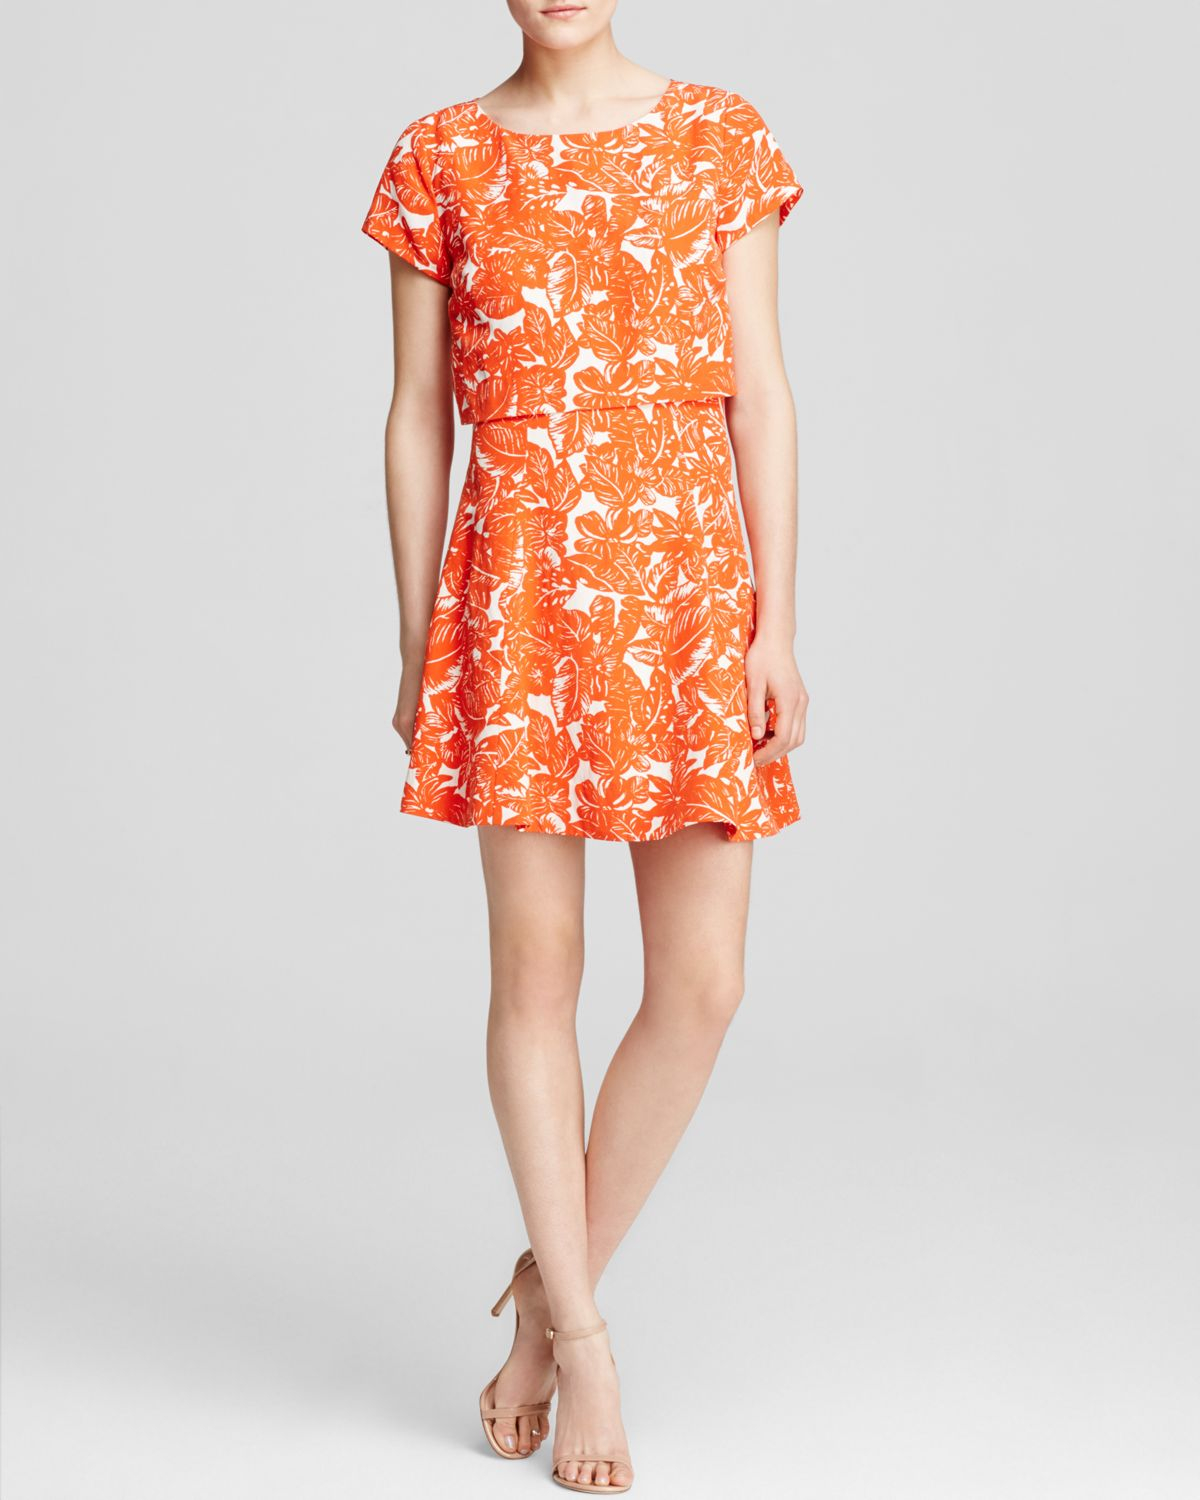 joie orange dress